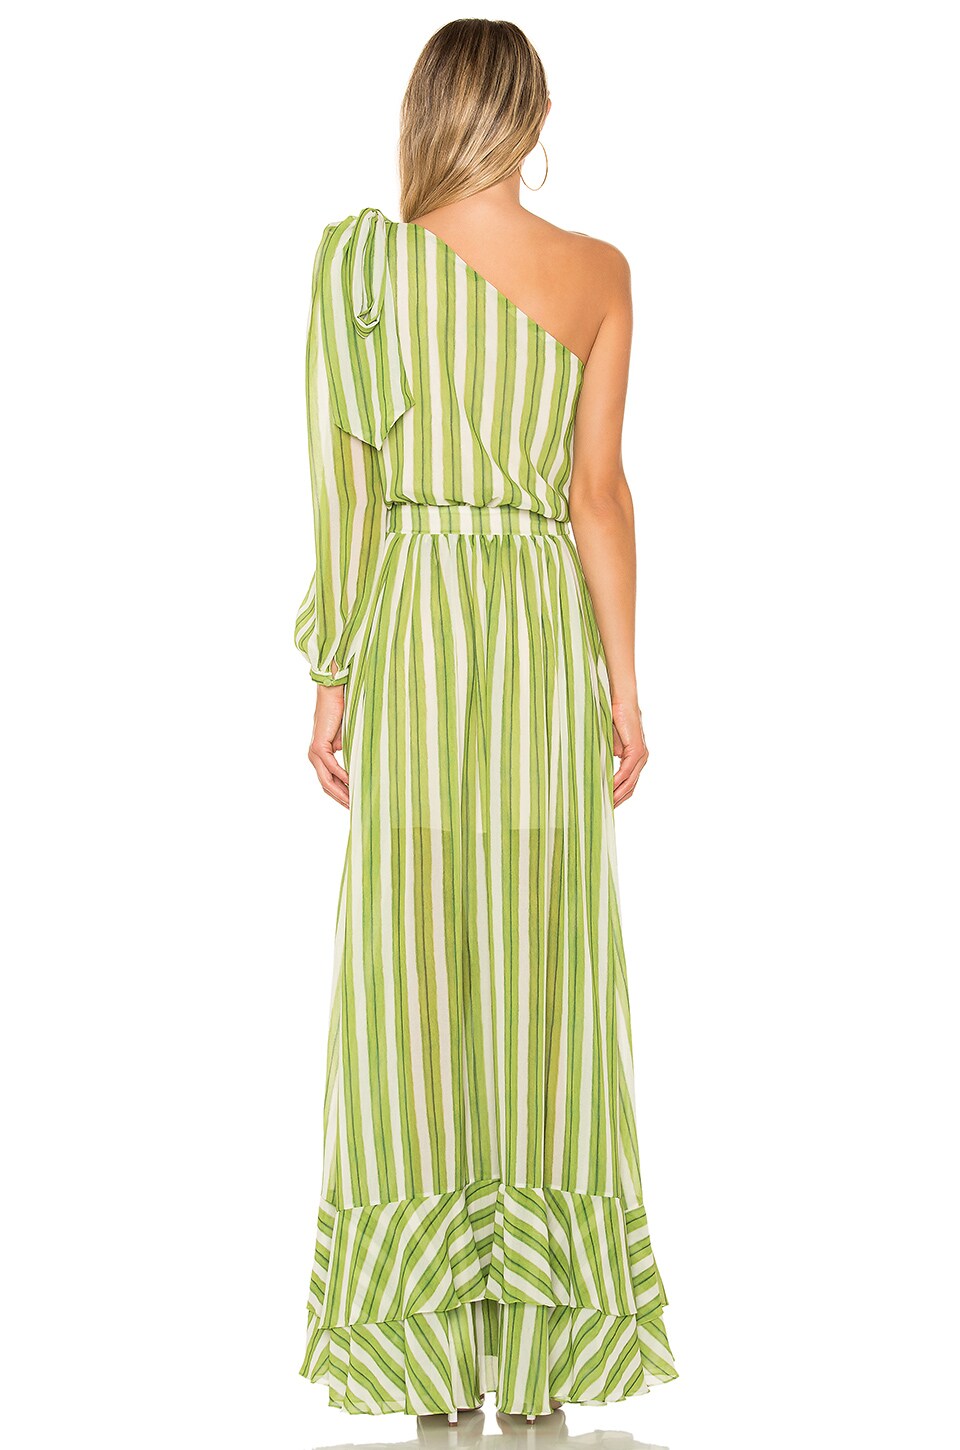 PatBO Striped One Shoulder Maxi Dress in Green & White | REVOLVE